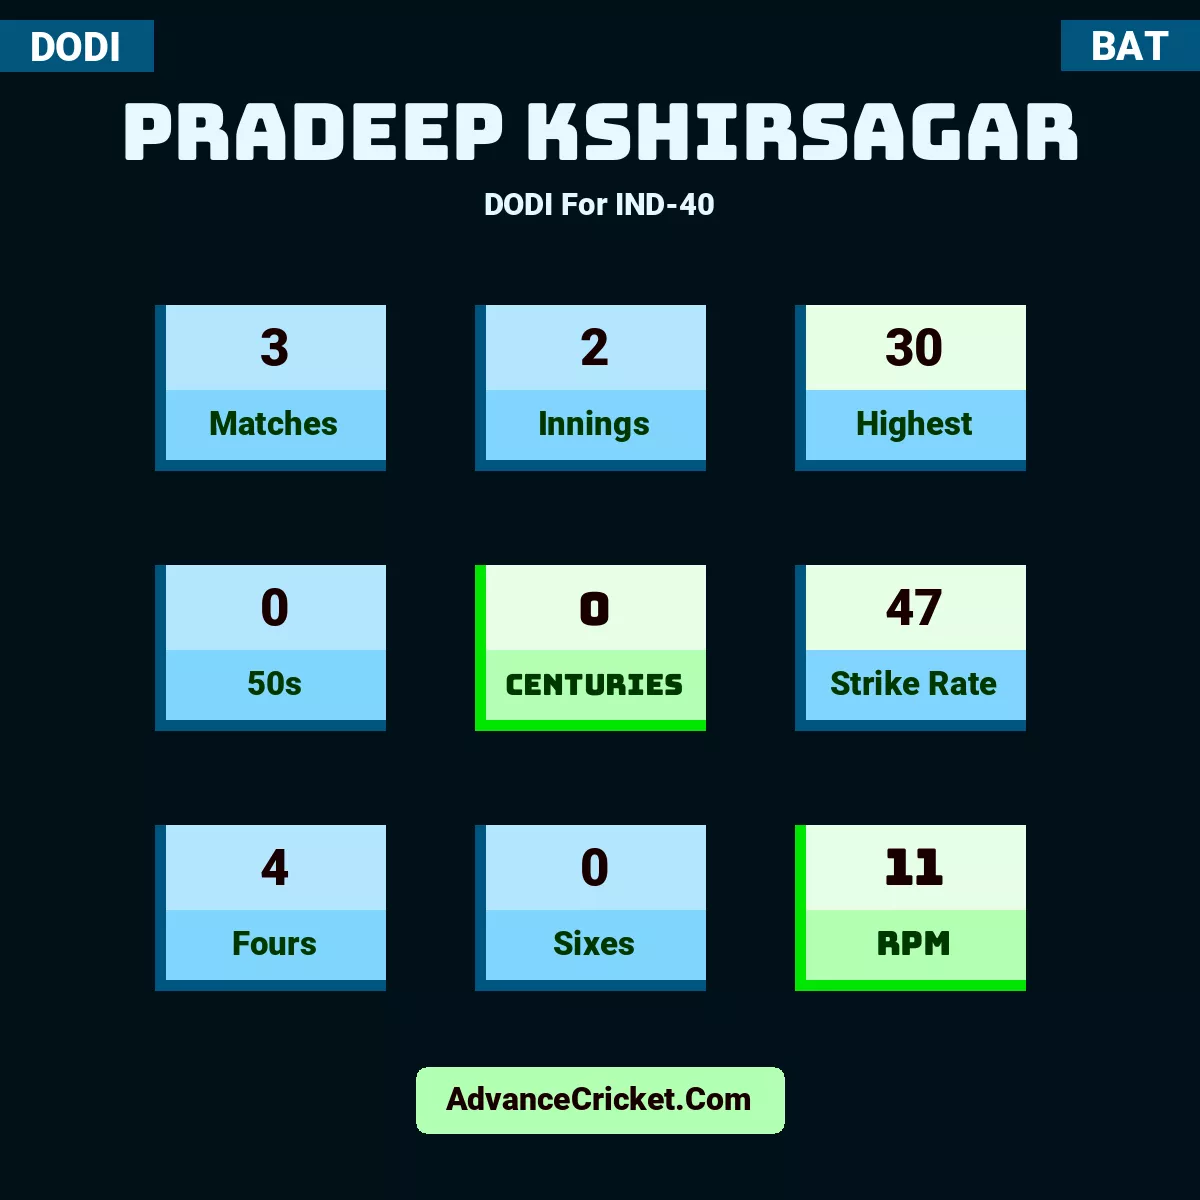 Pradeep Kshirsagar DODI  For IND-40, Pradeep Kshirsagar played 3 matches, scored 30 runs as highest, 0 half-centuries, and 0 centuries, with a strike rate of 47. P.Kshirsagar hit 4 fours and 0 sixes, with an RPM of 11.